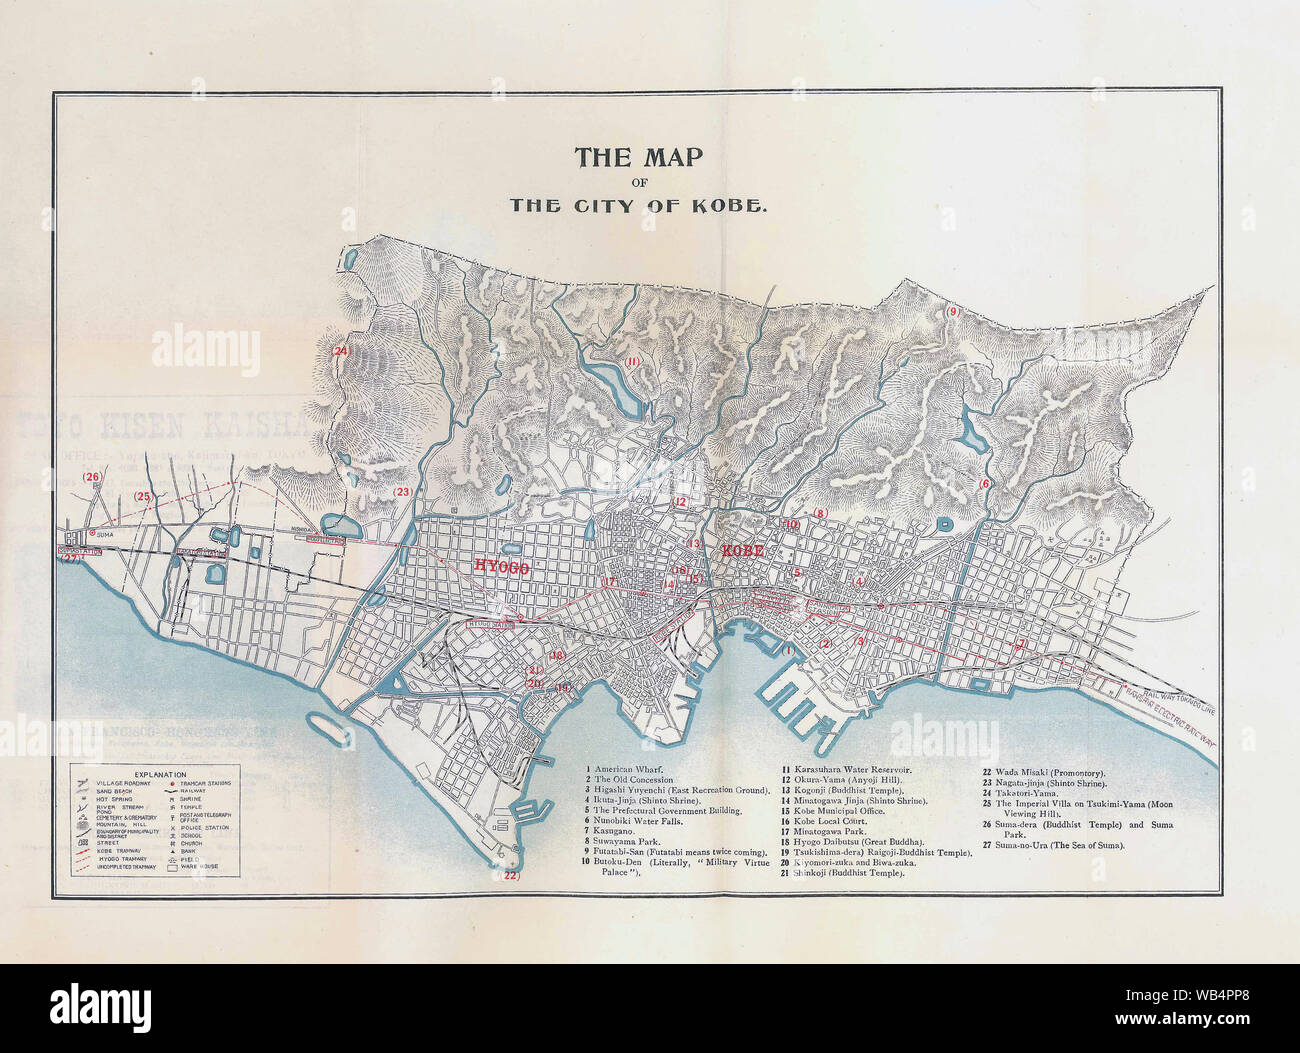 [ 1910s Japan - Map of Kobe 1912 ] —   Map of Kobe from The City of Kobe, published by Kobe City Office, 1912 (Taisho 1).  20th century vintage map. Stock Photo